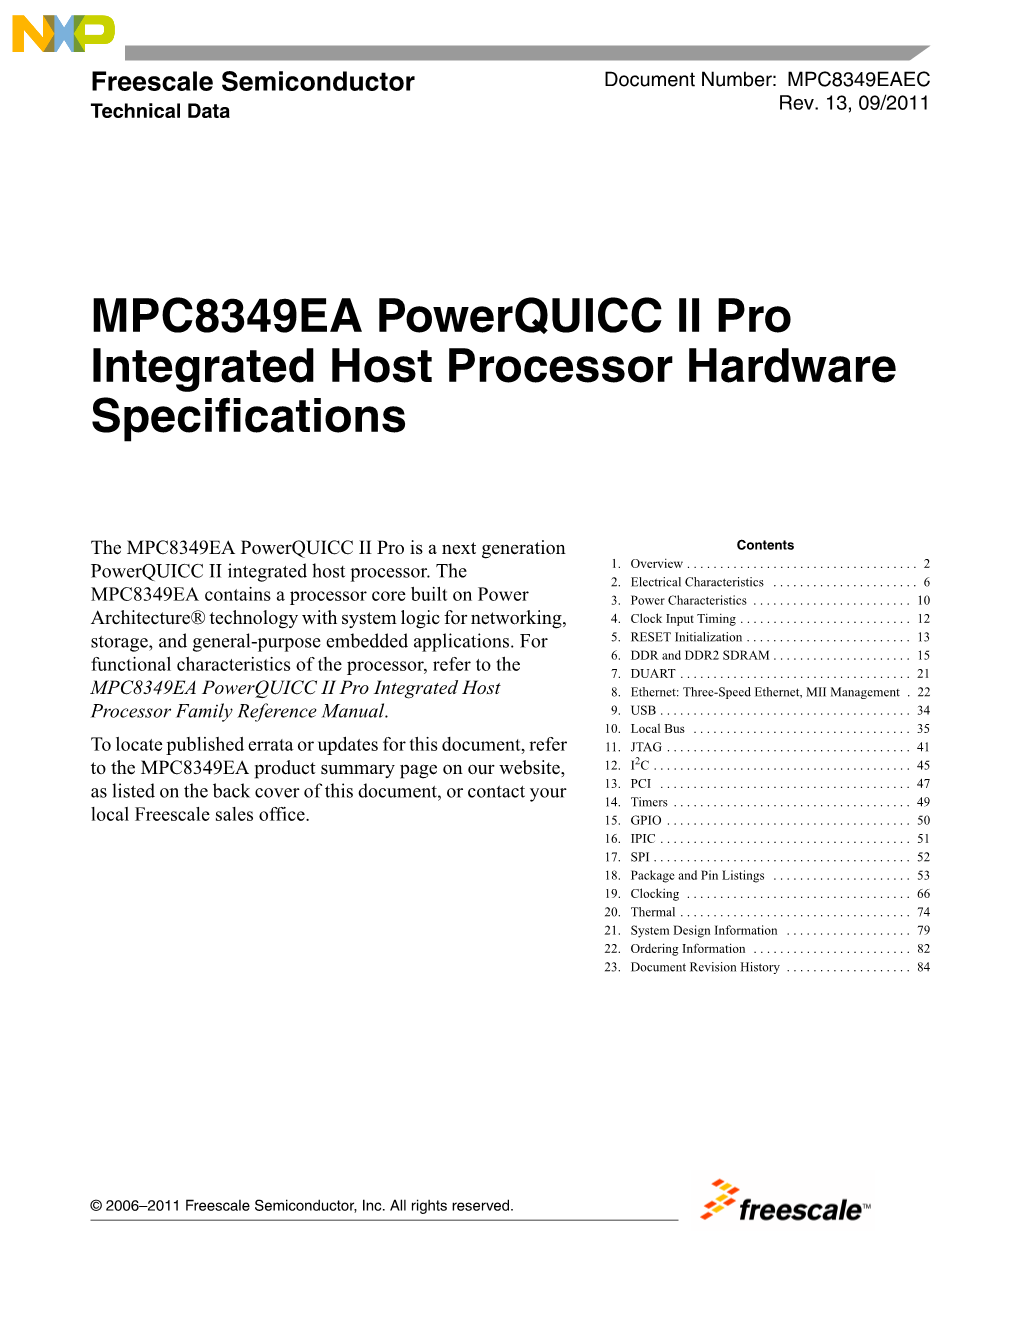 MPC8349EA Powerquicc II Pro Integrated Host Processor Hardware Specifications